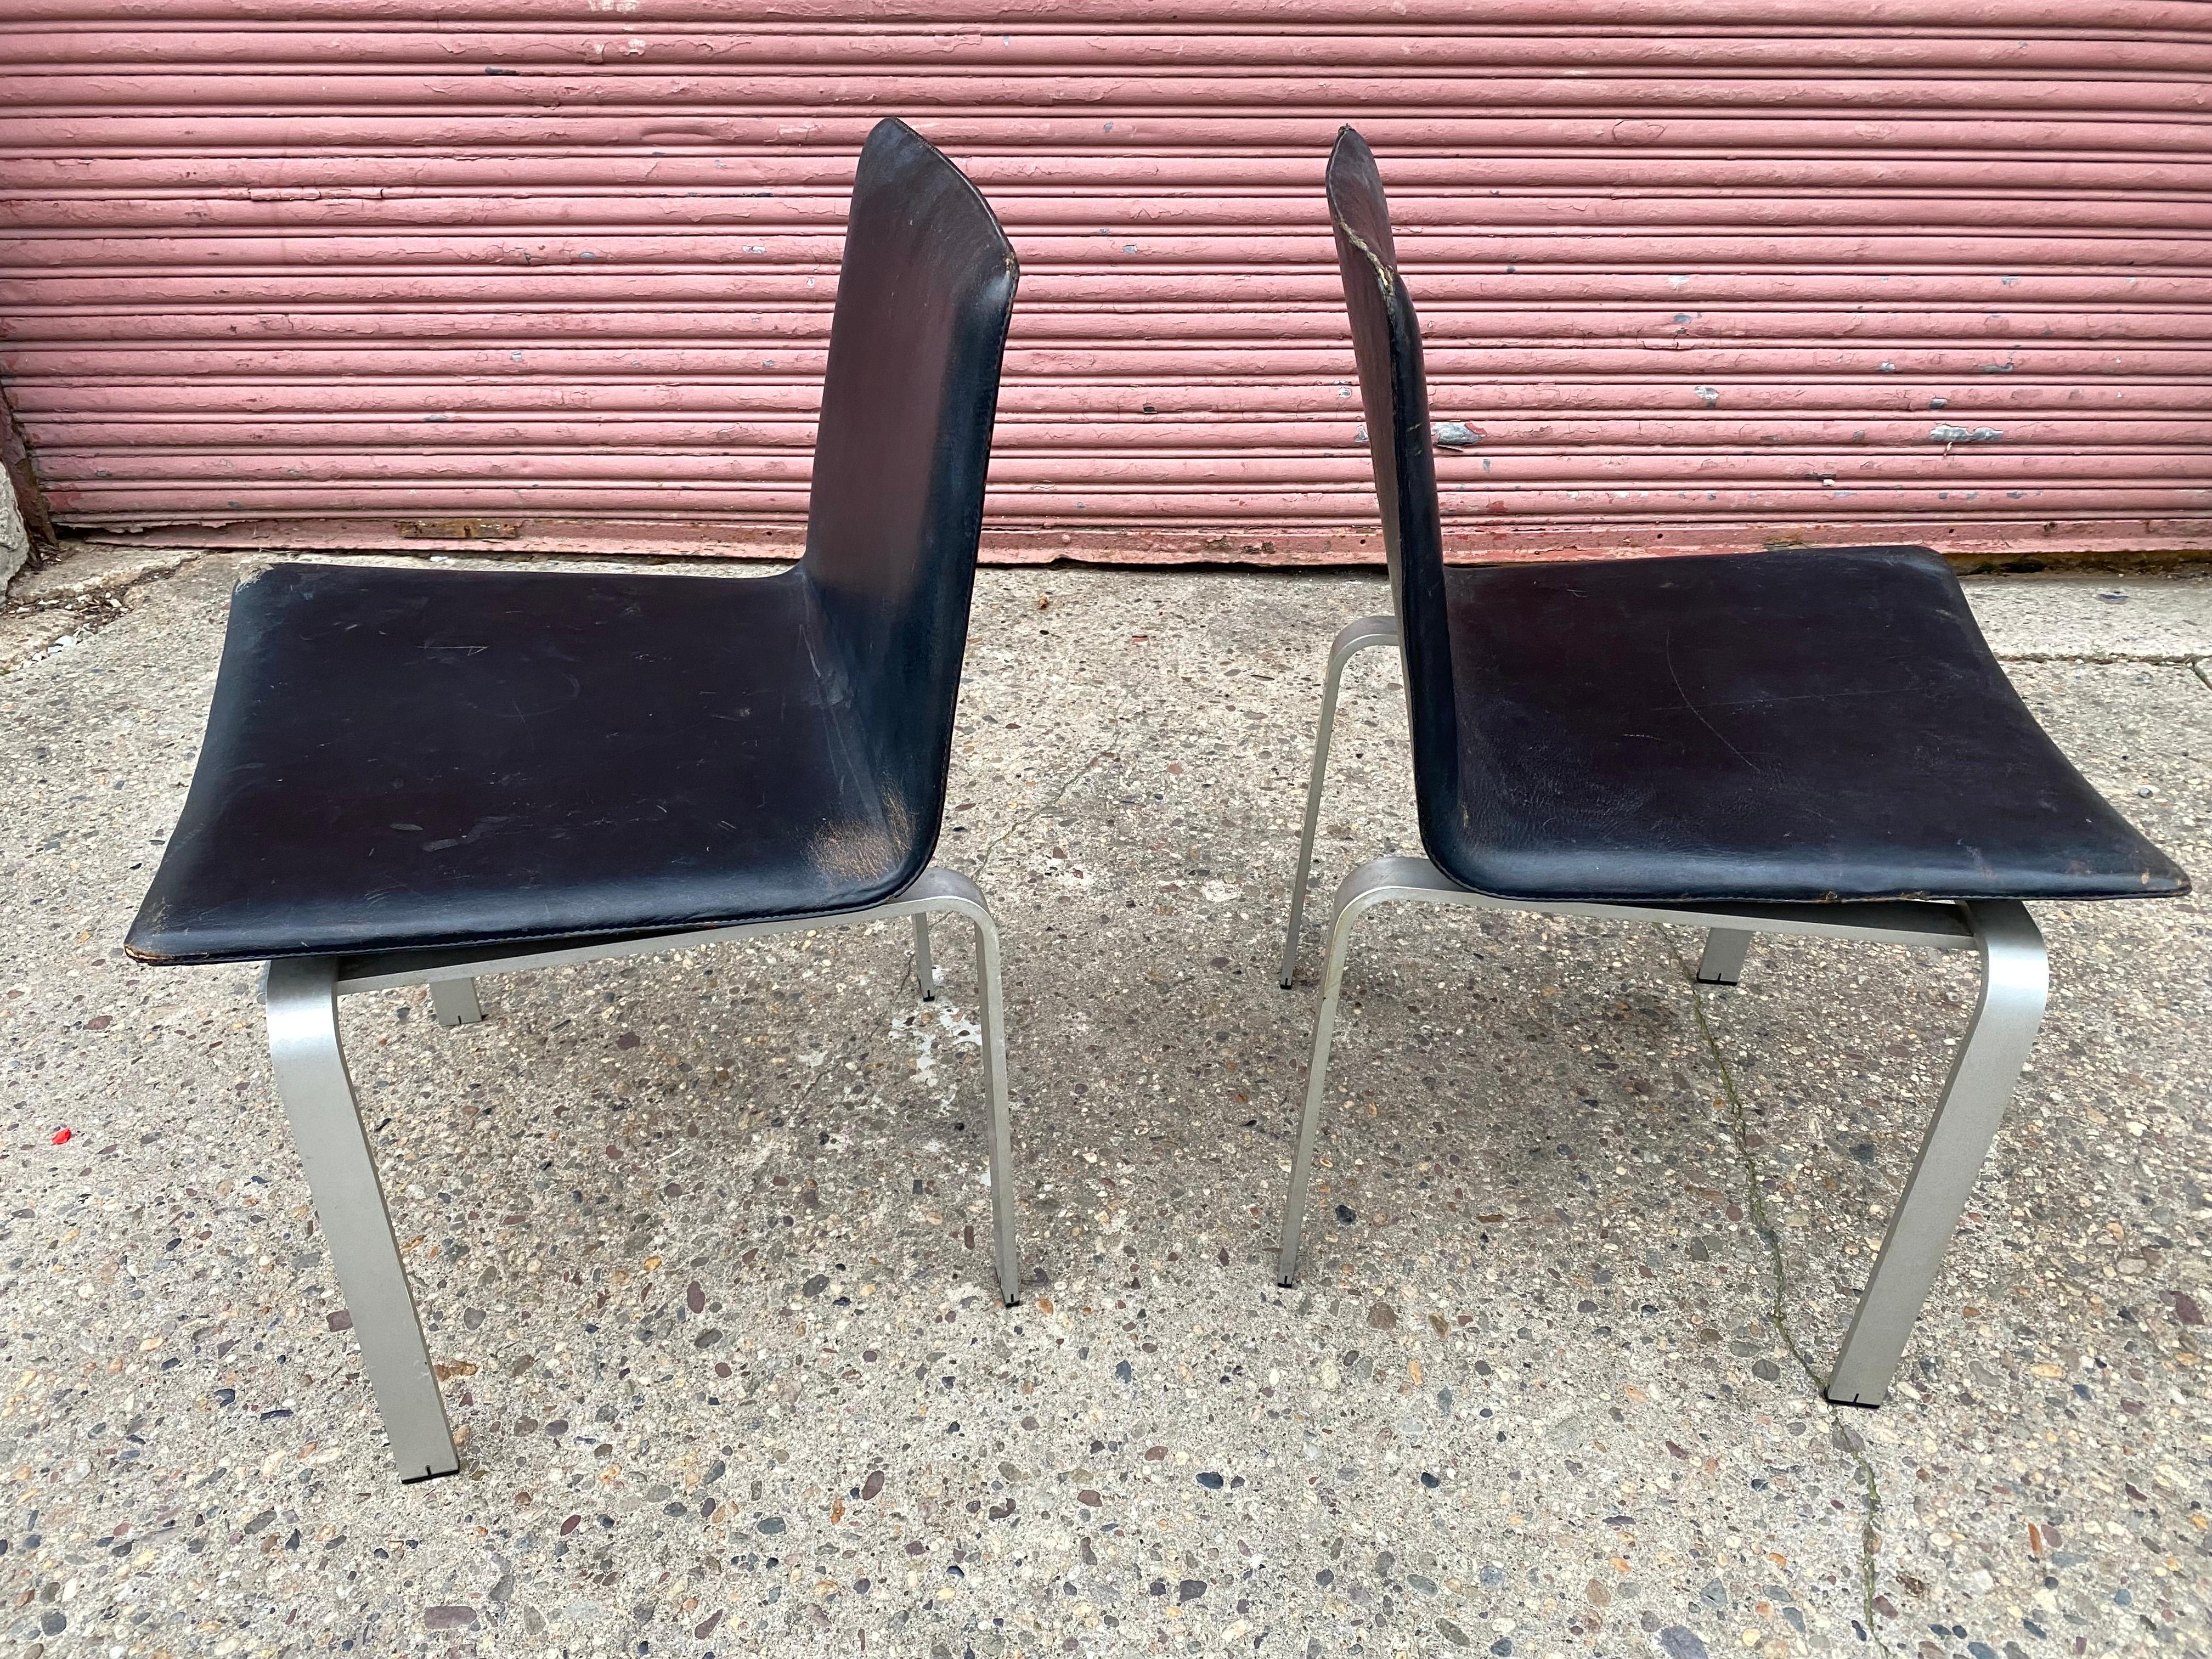 Scandinavian Modern Jorgen Hoj for Johannes Hansen Aluminum and Leather Chairs 1962 For Sale